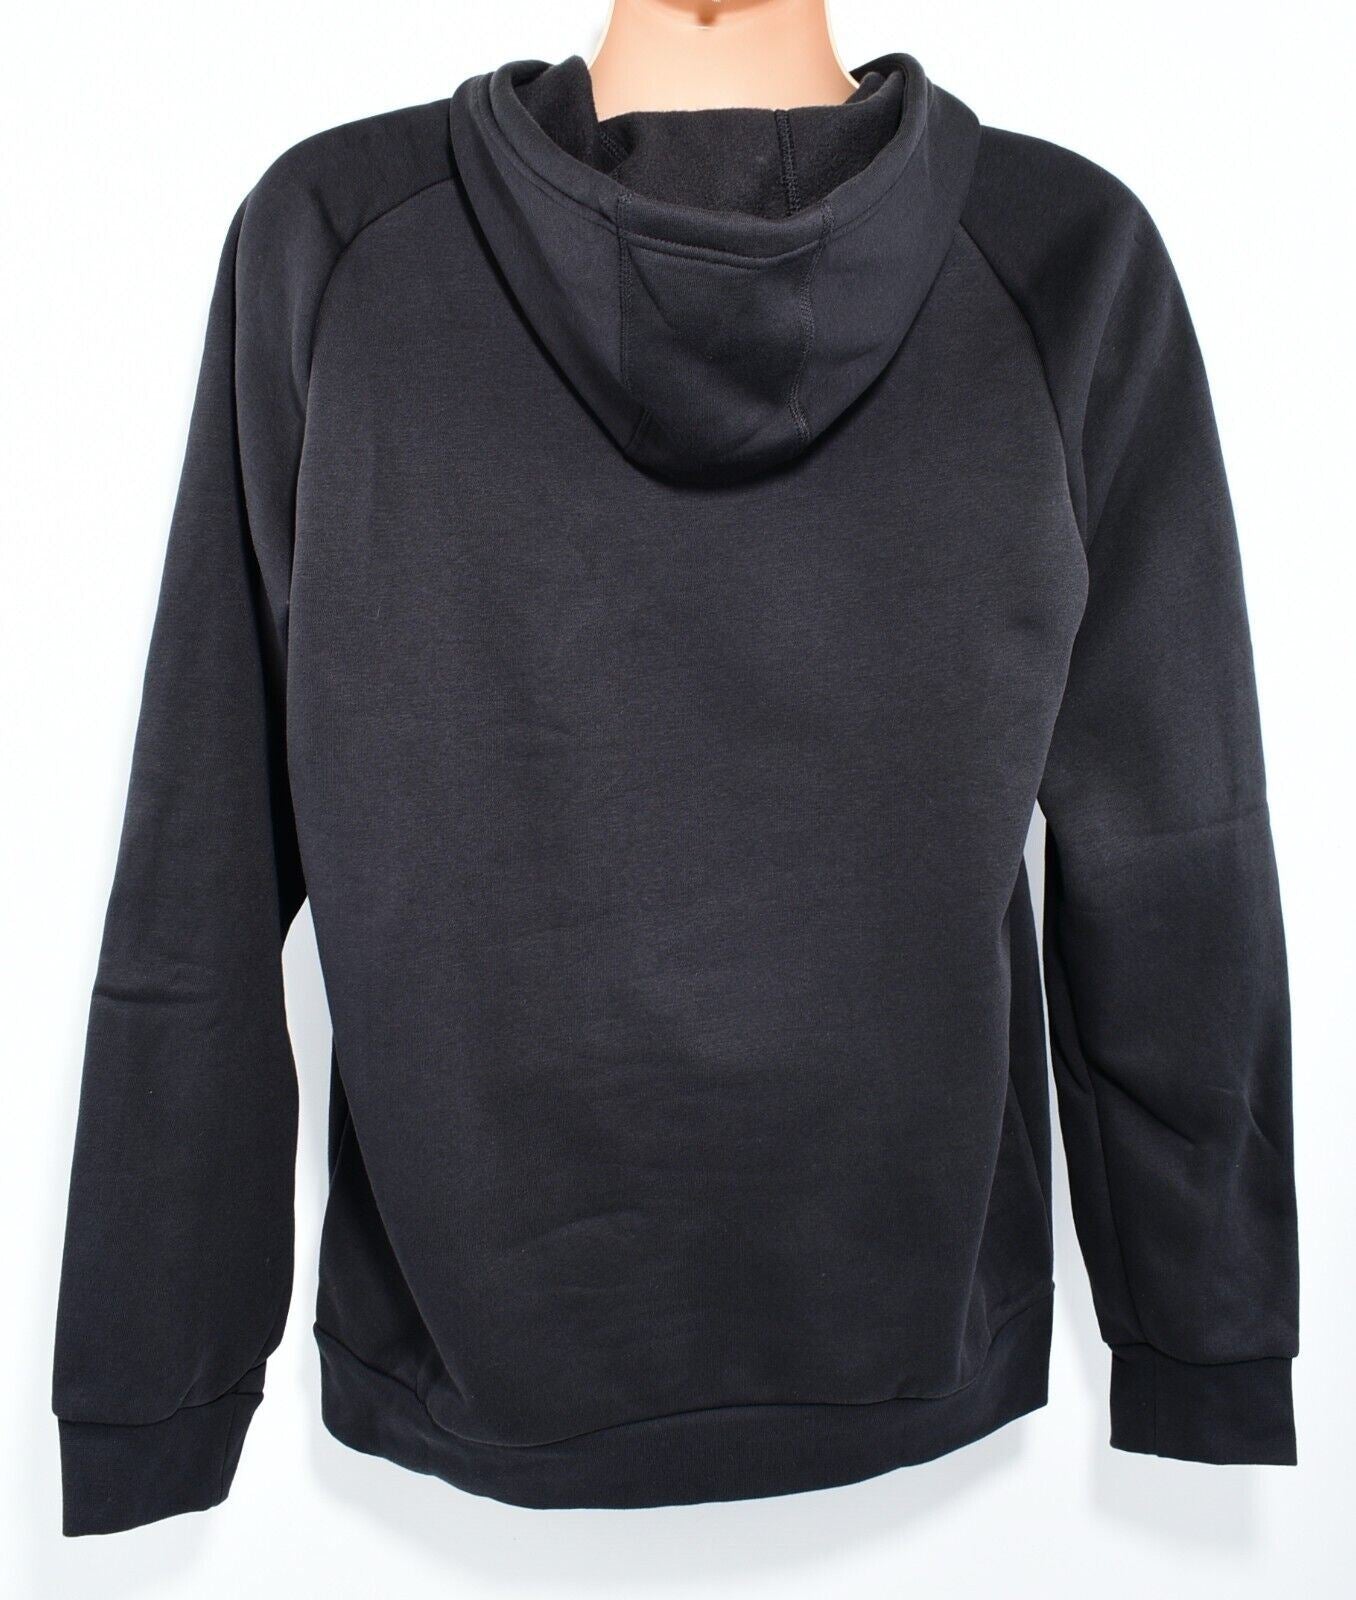 ADIDAS Mens Core 18 Fleece Lined Hoodie Sweatshirt, Black, size L